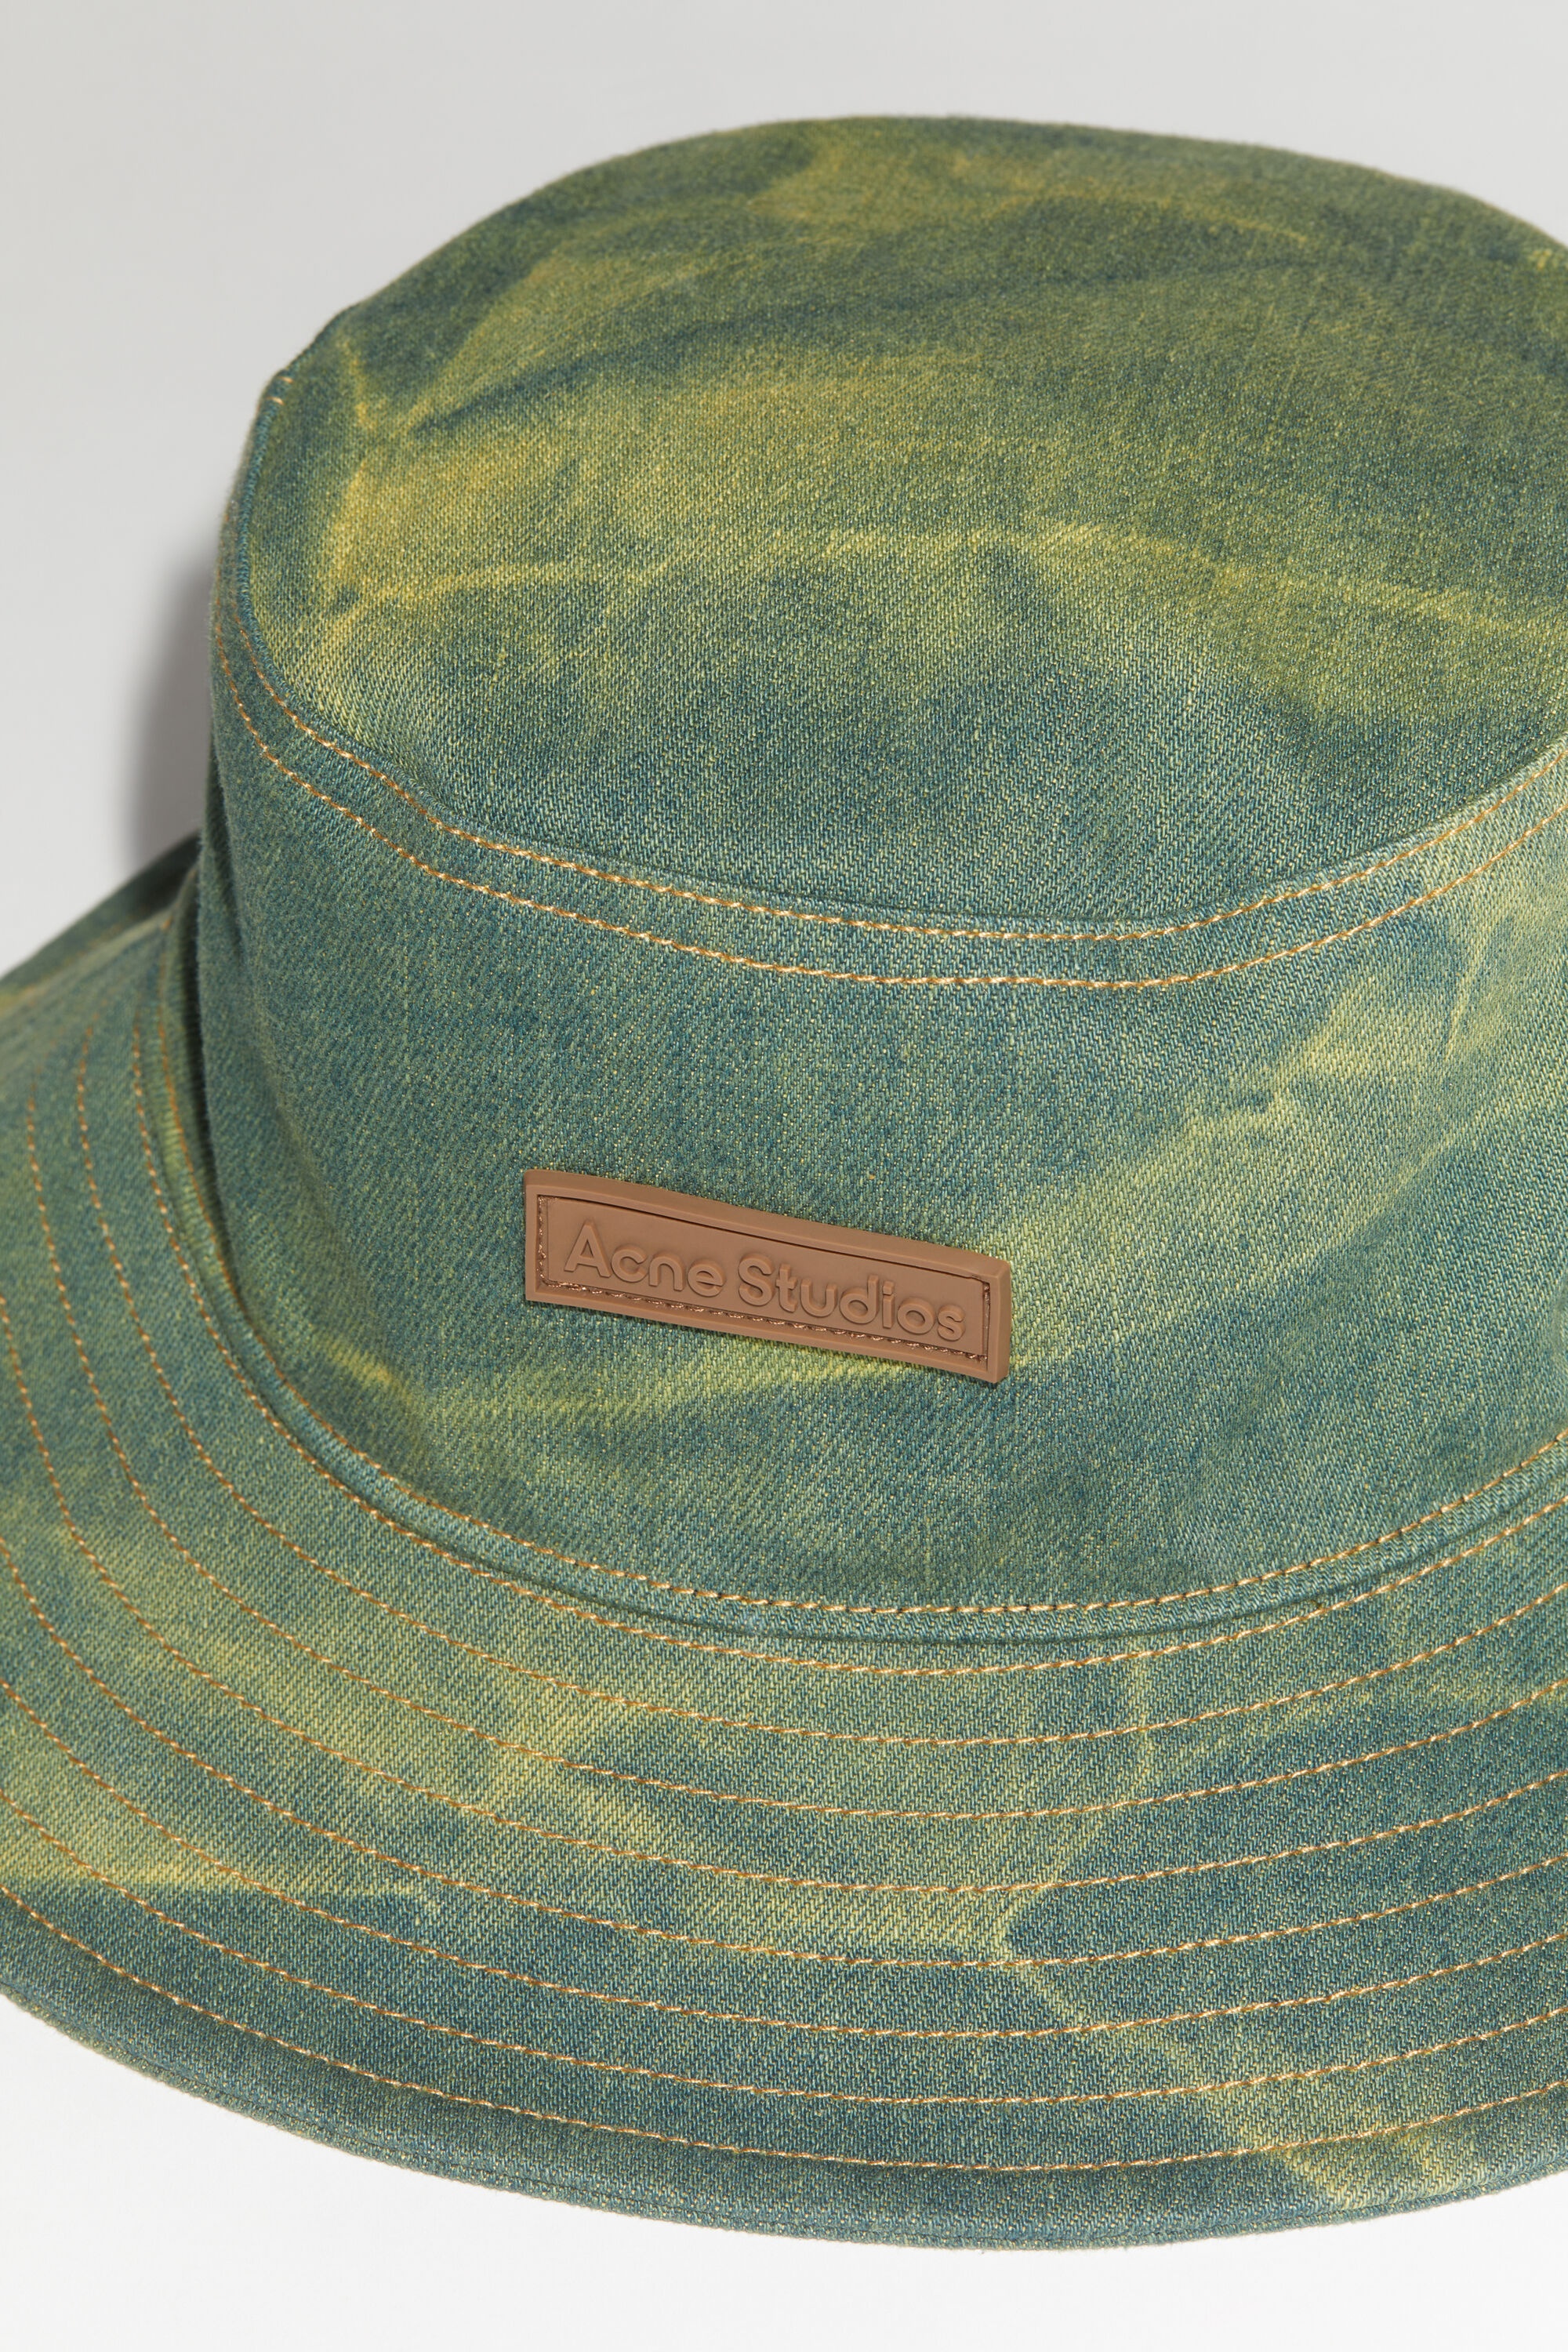 Acne Studios Denim bucket hat - Yellow/blue | REVERSIBLE